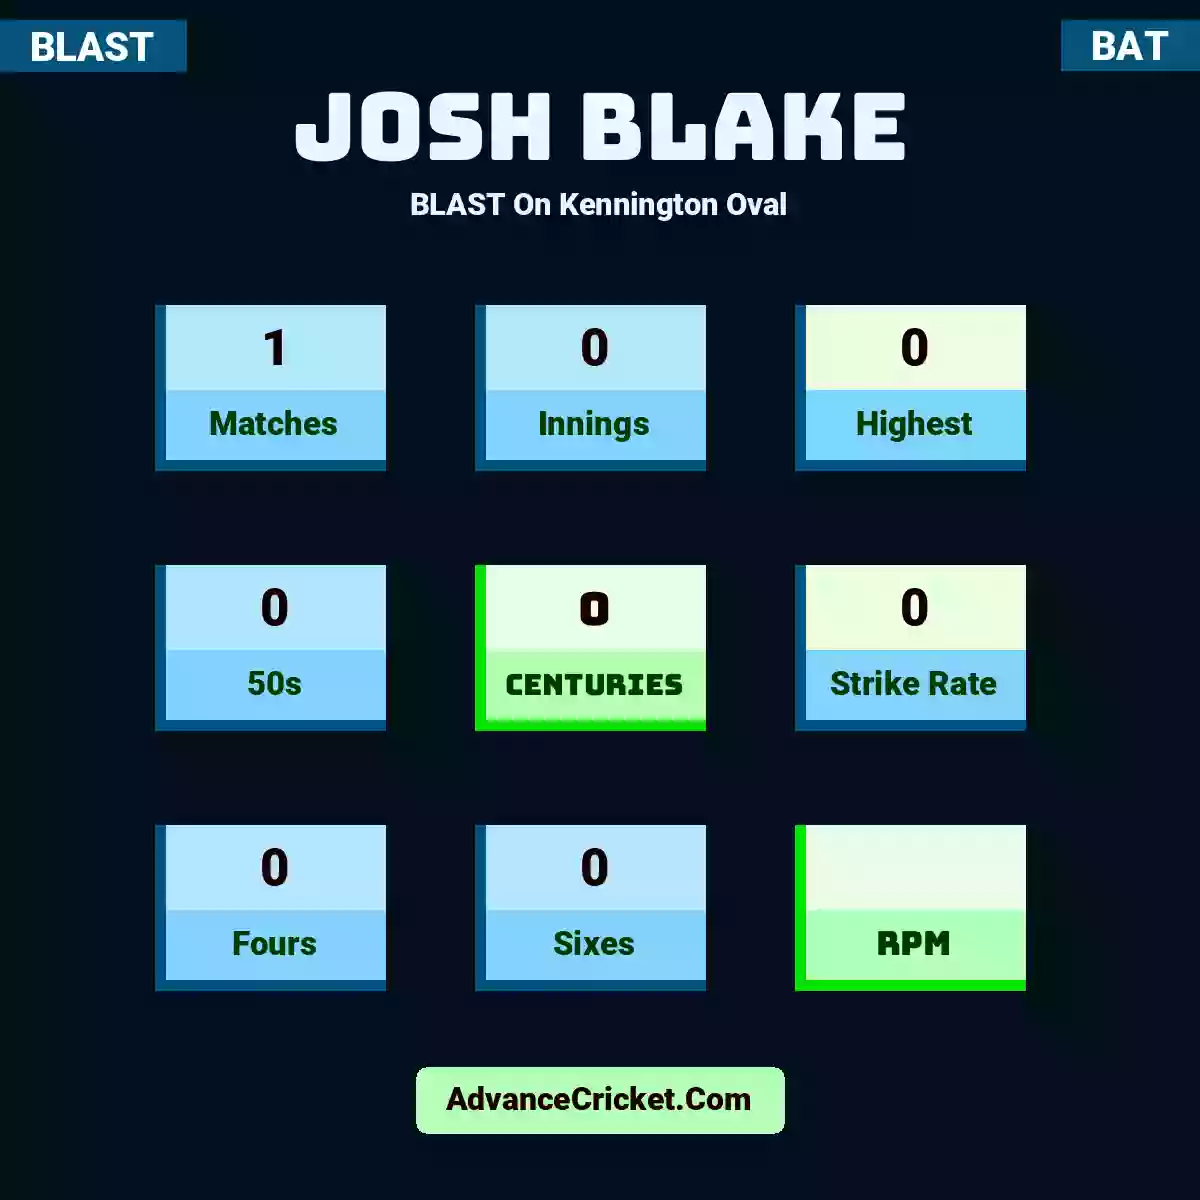 Josh Blake BLAST  On Kennington Oval, Josh Blake played 1 matches, scored 0 runs as highest, 0 half-centuries, and 0 centuries, with a strike rate of 0. J.Blake hit 0 fours and 0 sixes.